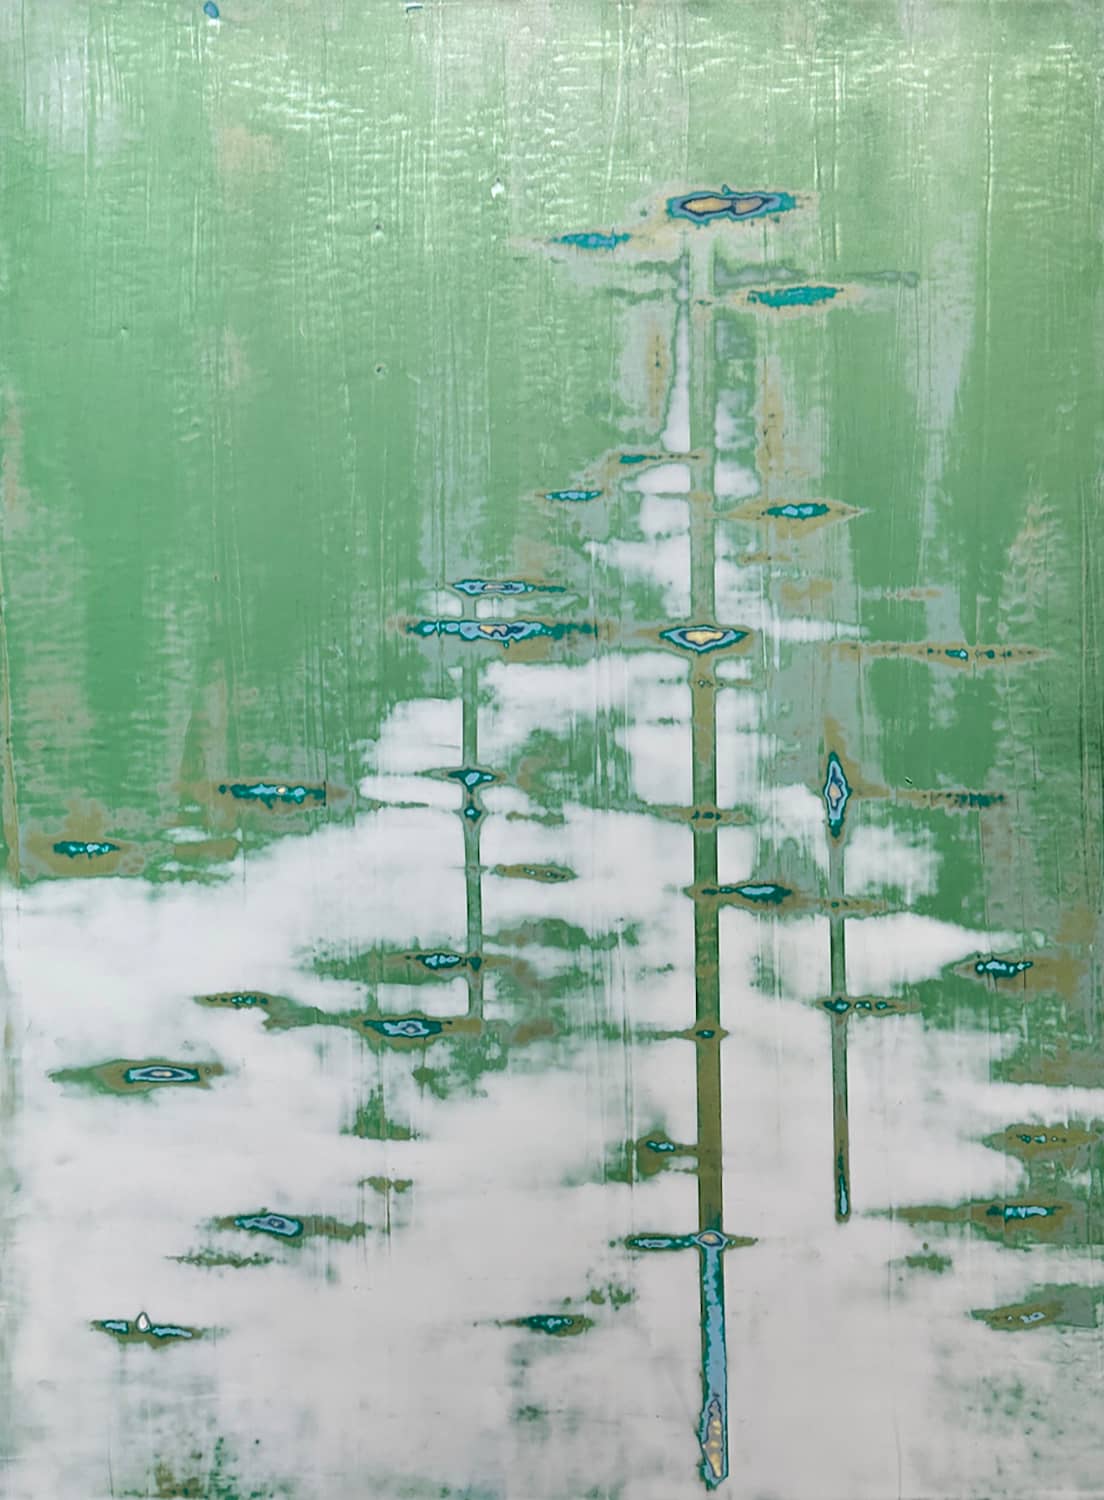 Emerald Shores_Audra Weaser_Acrylic, Plaster Paint, Metallic pigments on Canvas_40 x 30